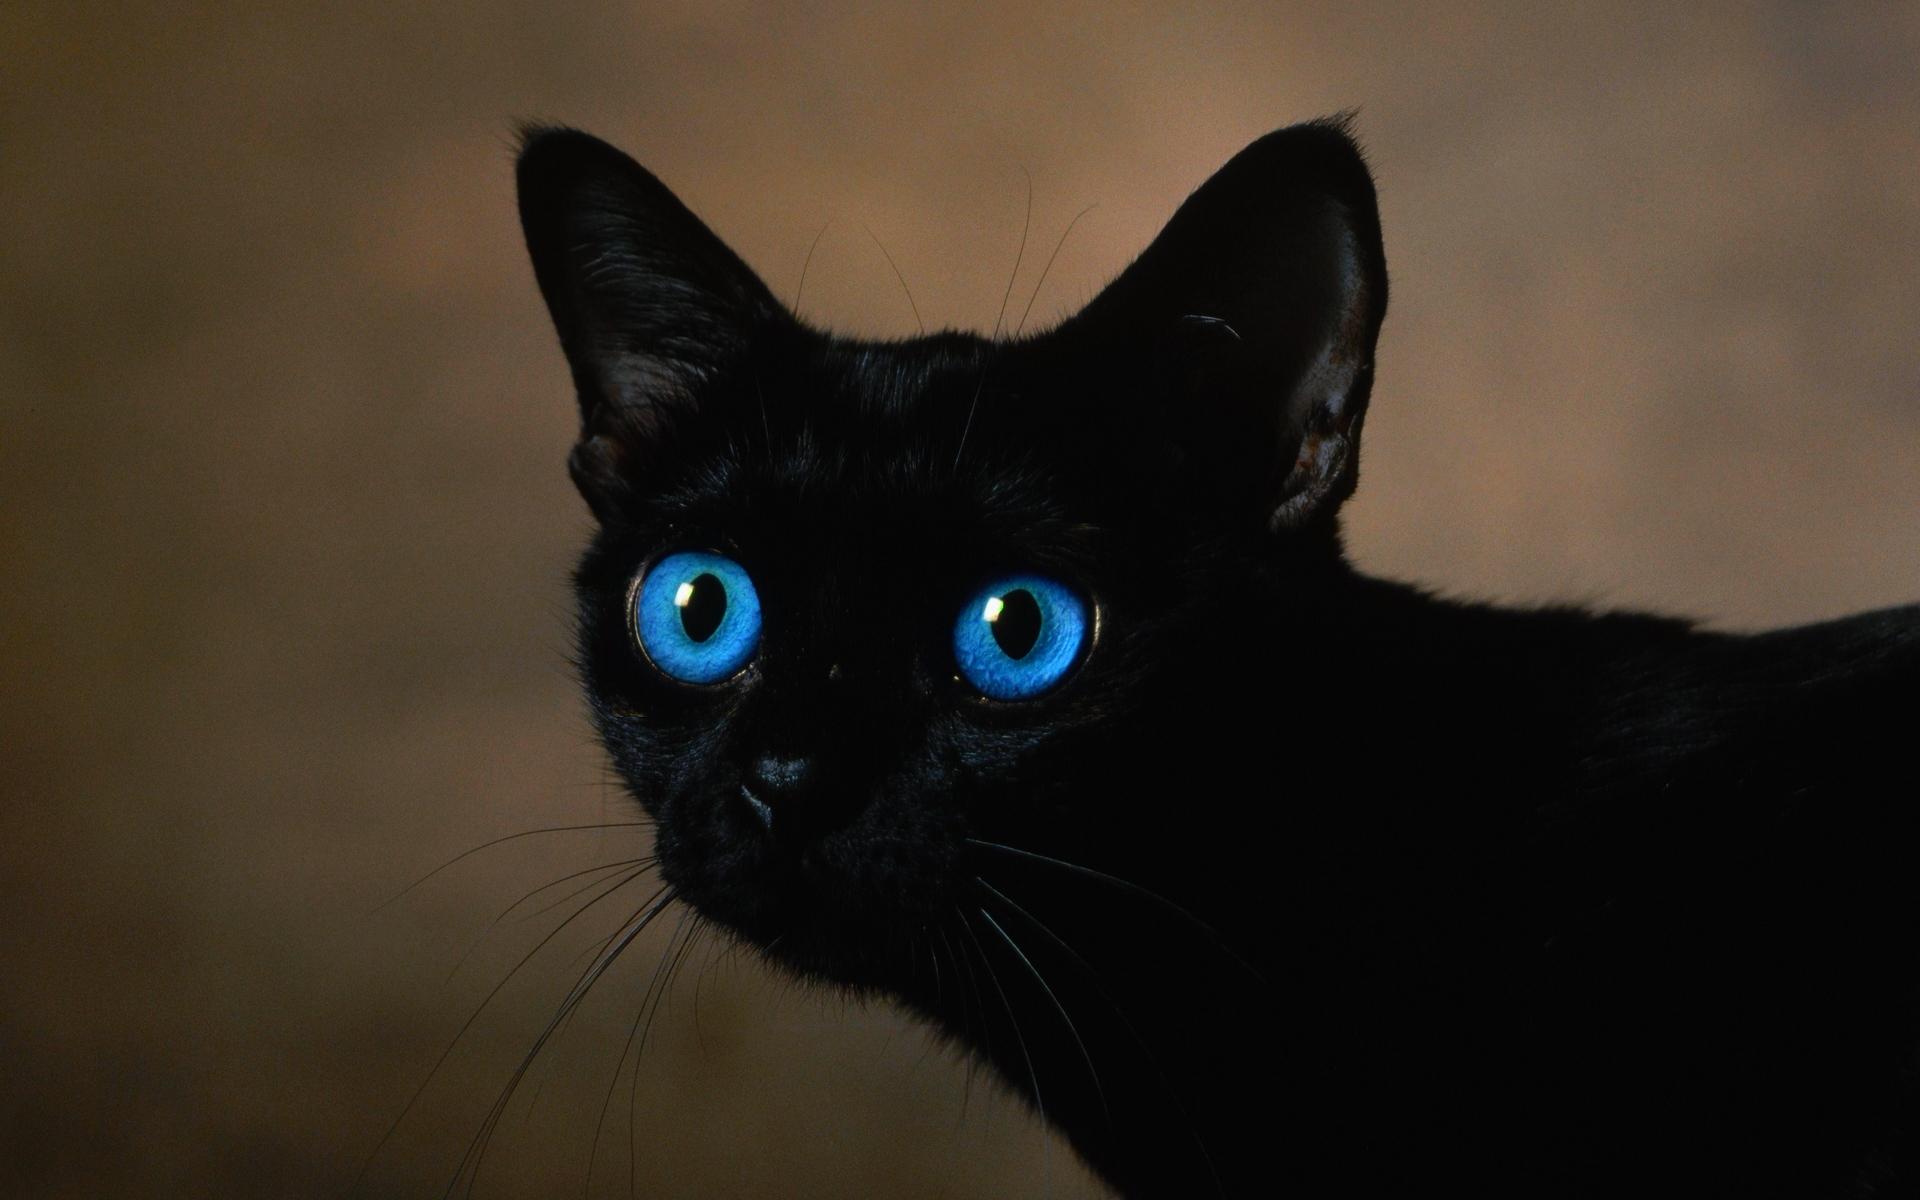 black-cat-with-blue-eyes-wallpaper-535d2d2b932ea.jpg